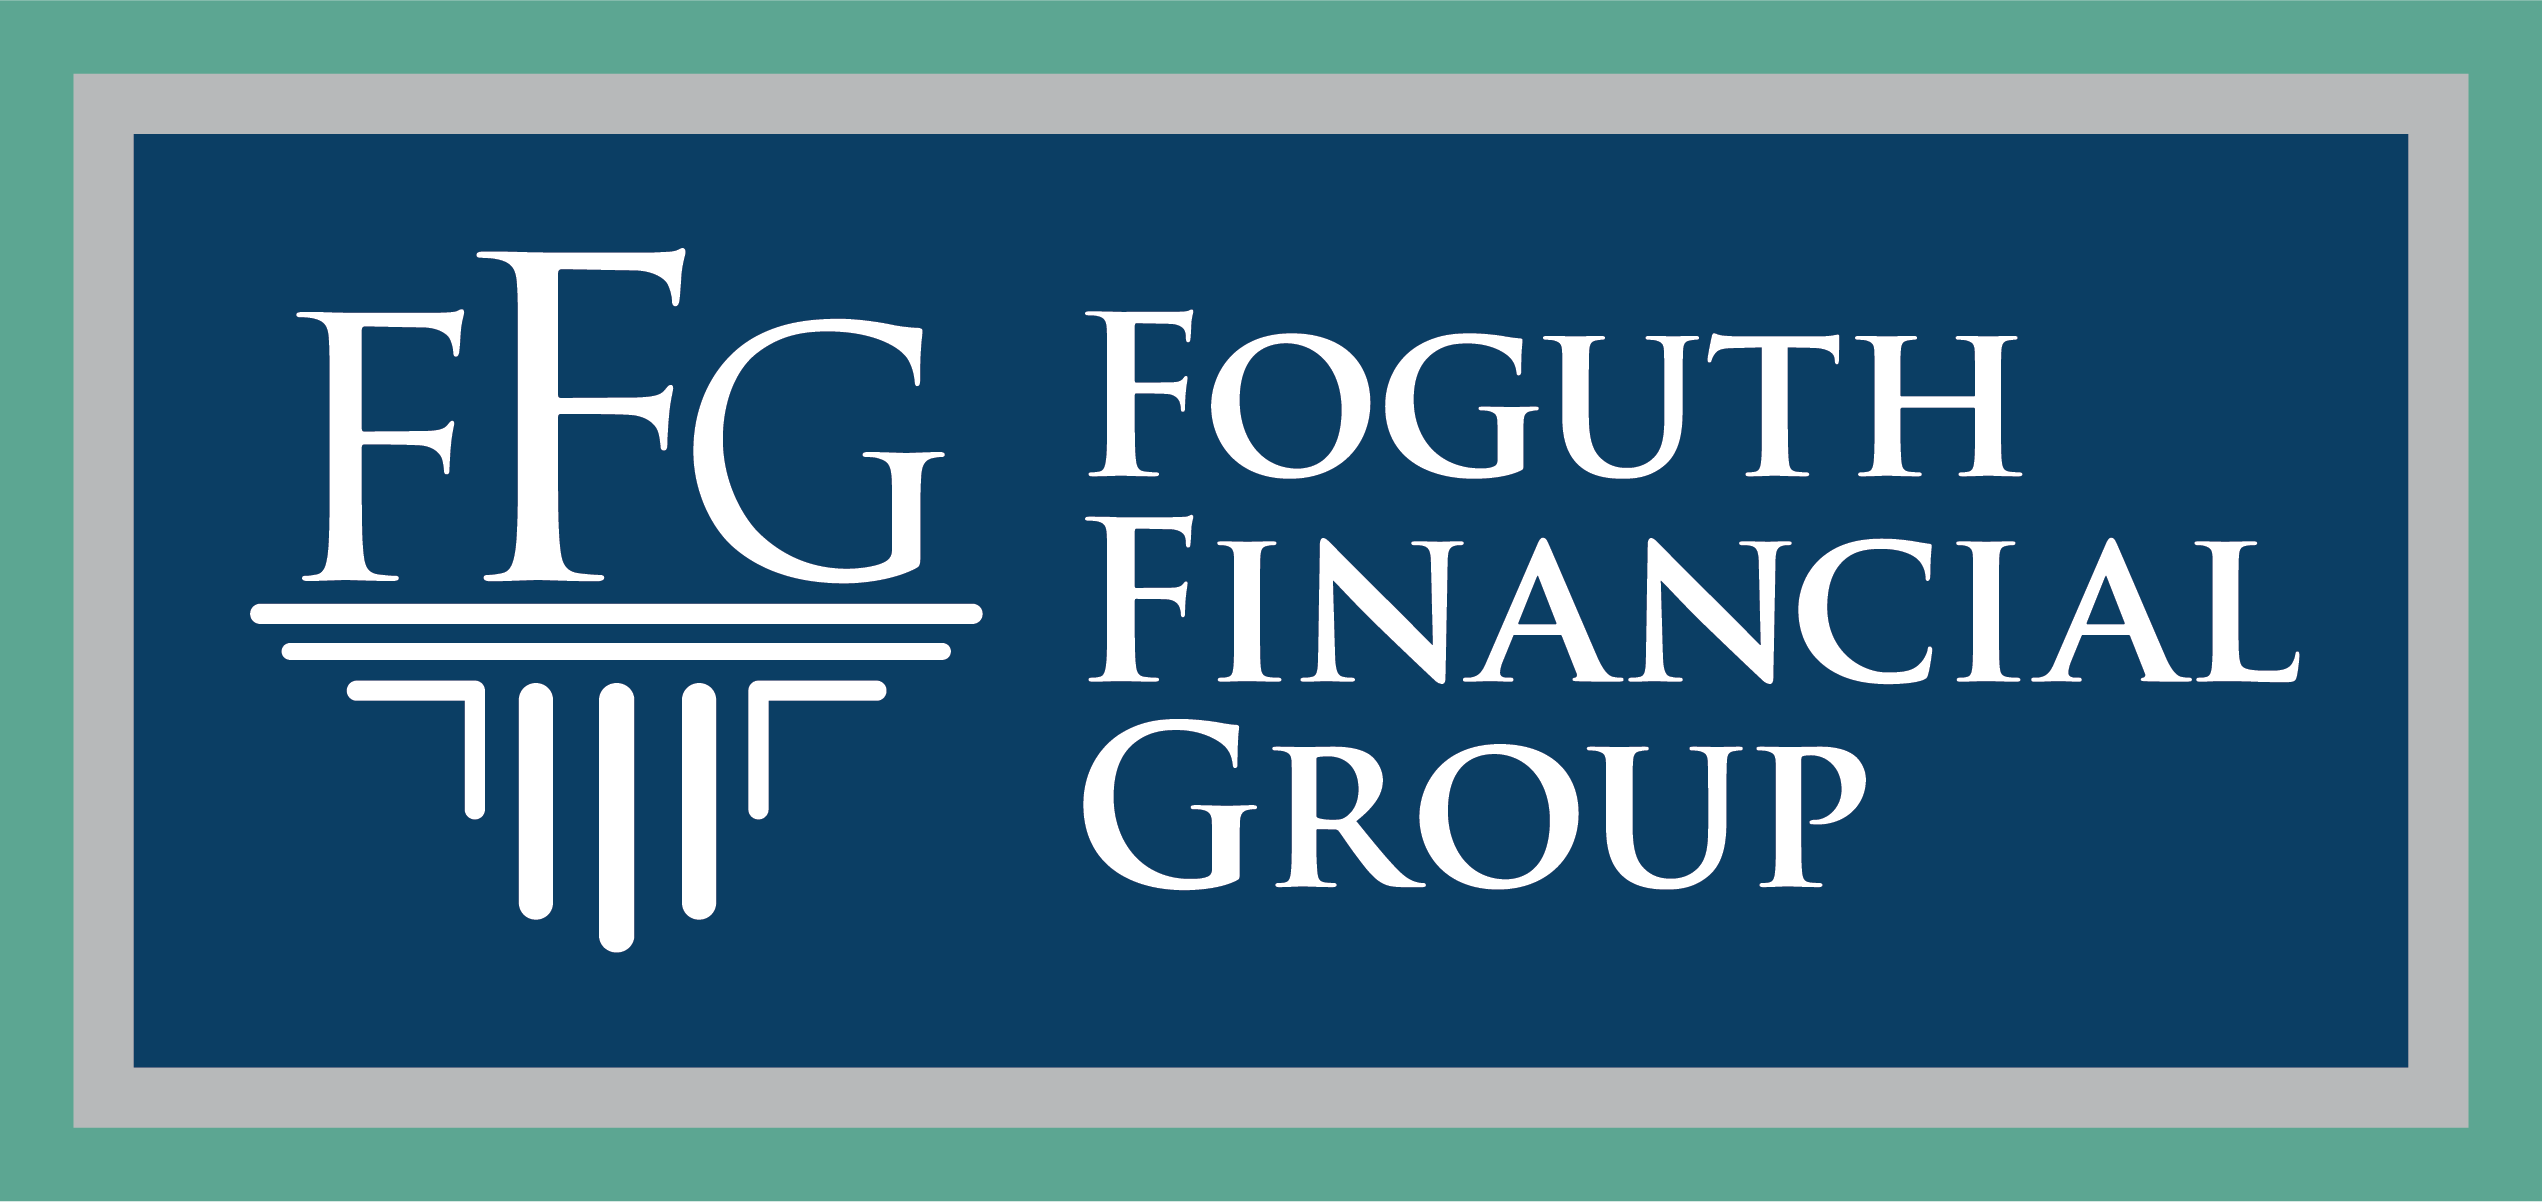 D8 Foguth Financial (proveedor)